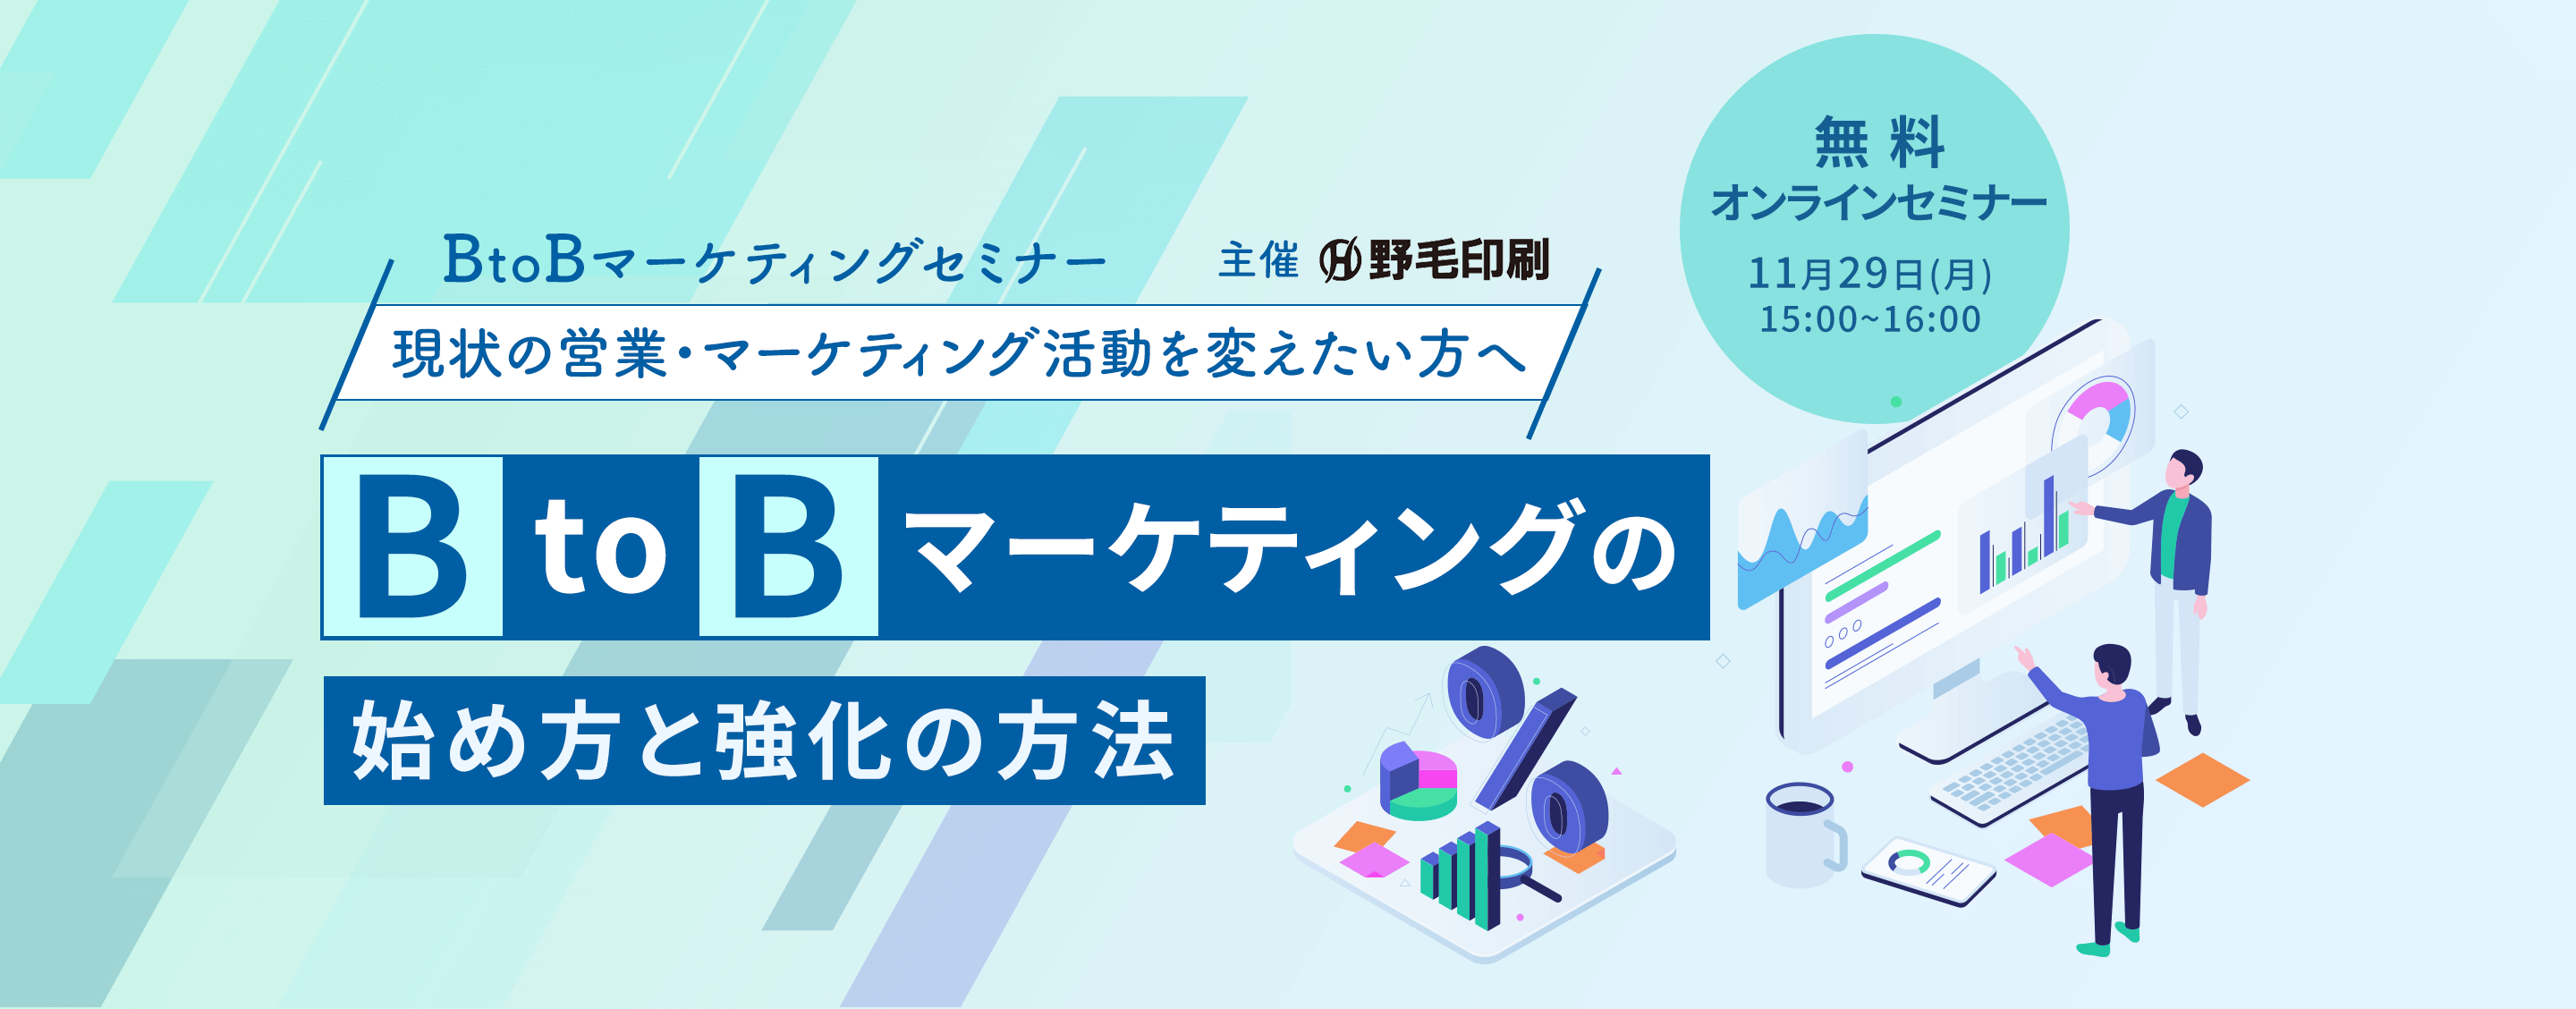 BtoBマーケティングセミナー「BtoBマーケティングの始め方と強化の方法」 無料オンラインセミナー 2021/11/29 16:00